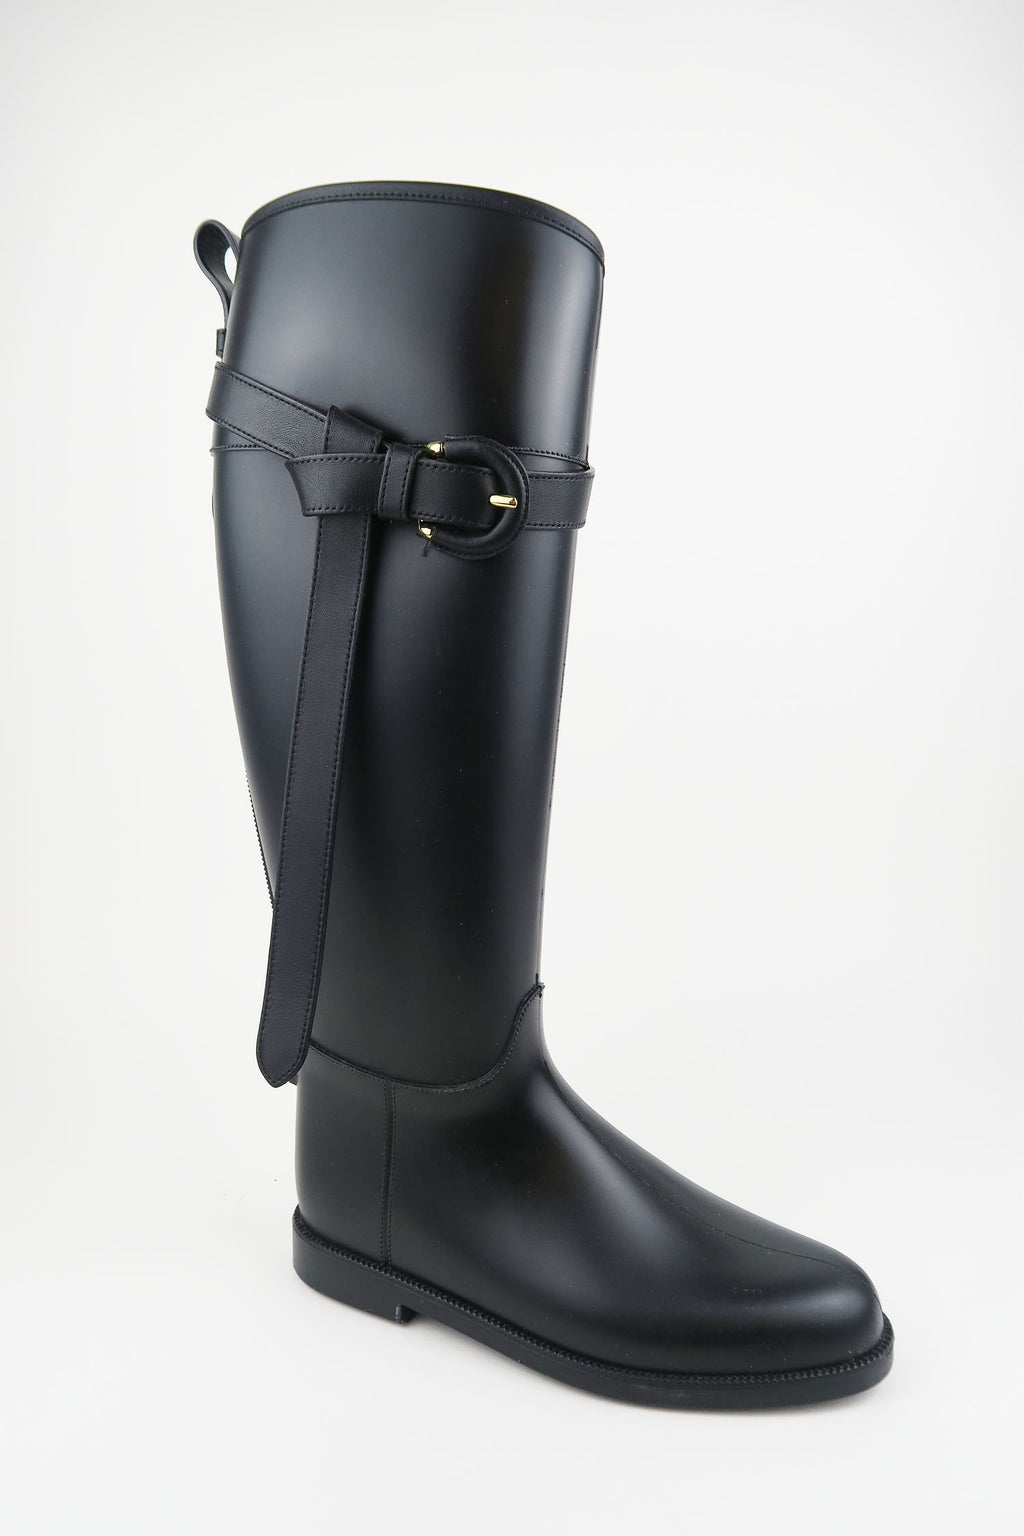 Burberry Rubber Rain Boots sz 36